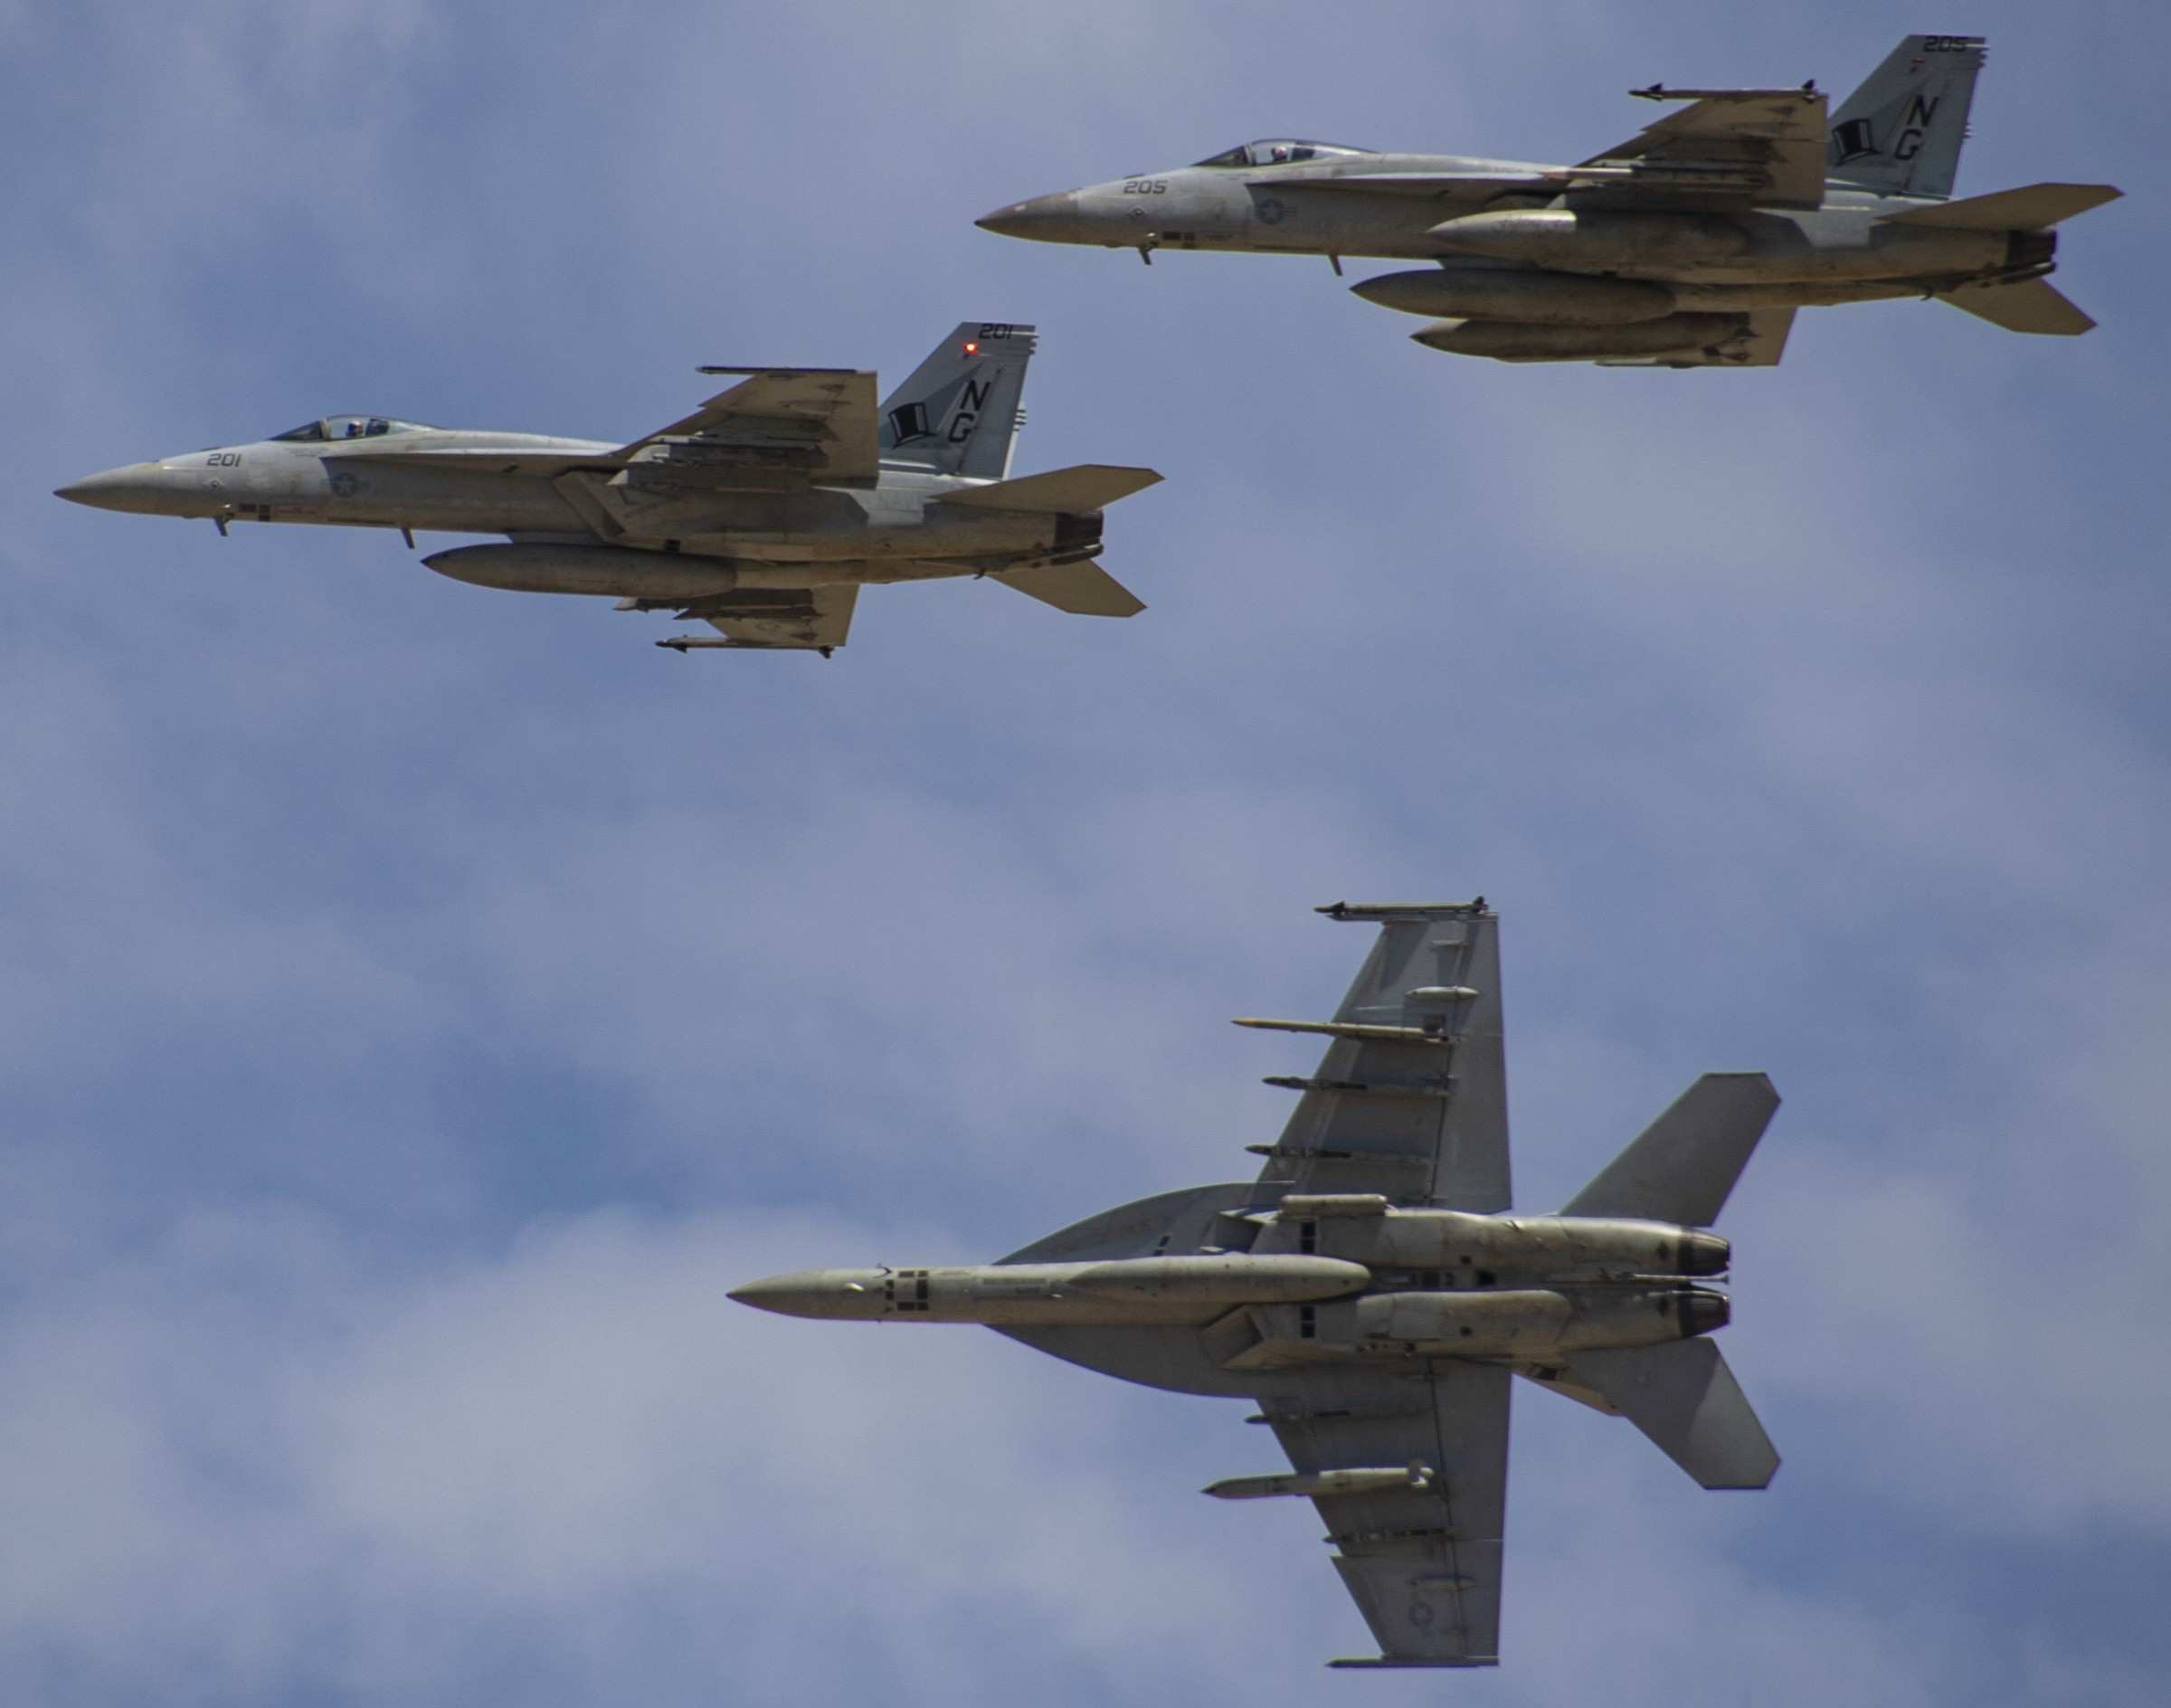 vfa-14 tophatters strike fighter squadron f/a-18e super hornet us navy return nas lemoore california 97